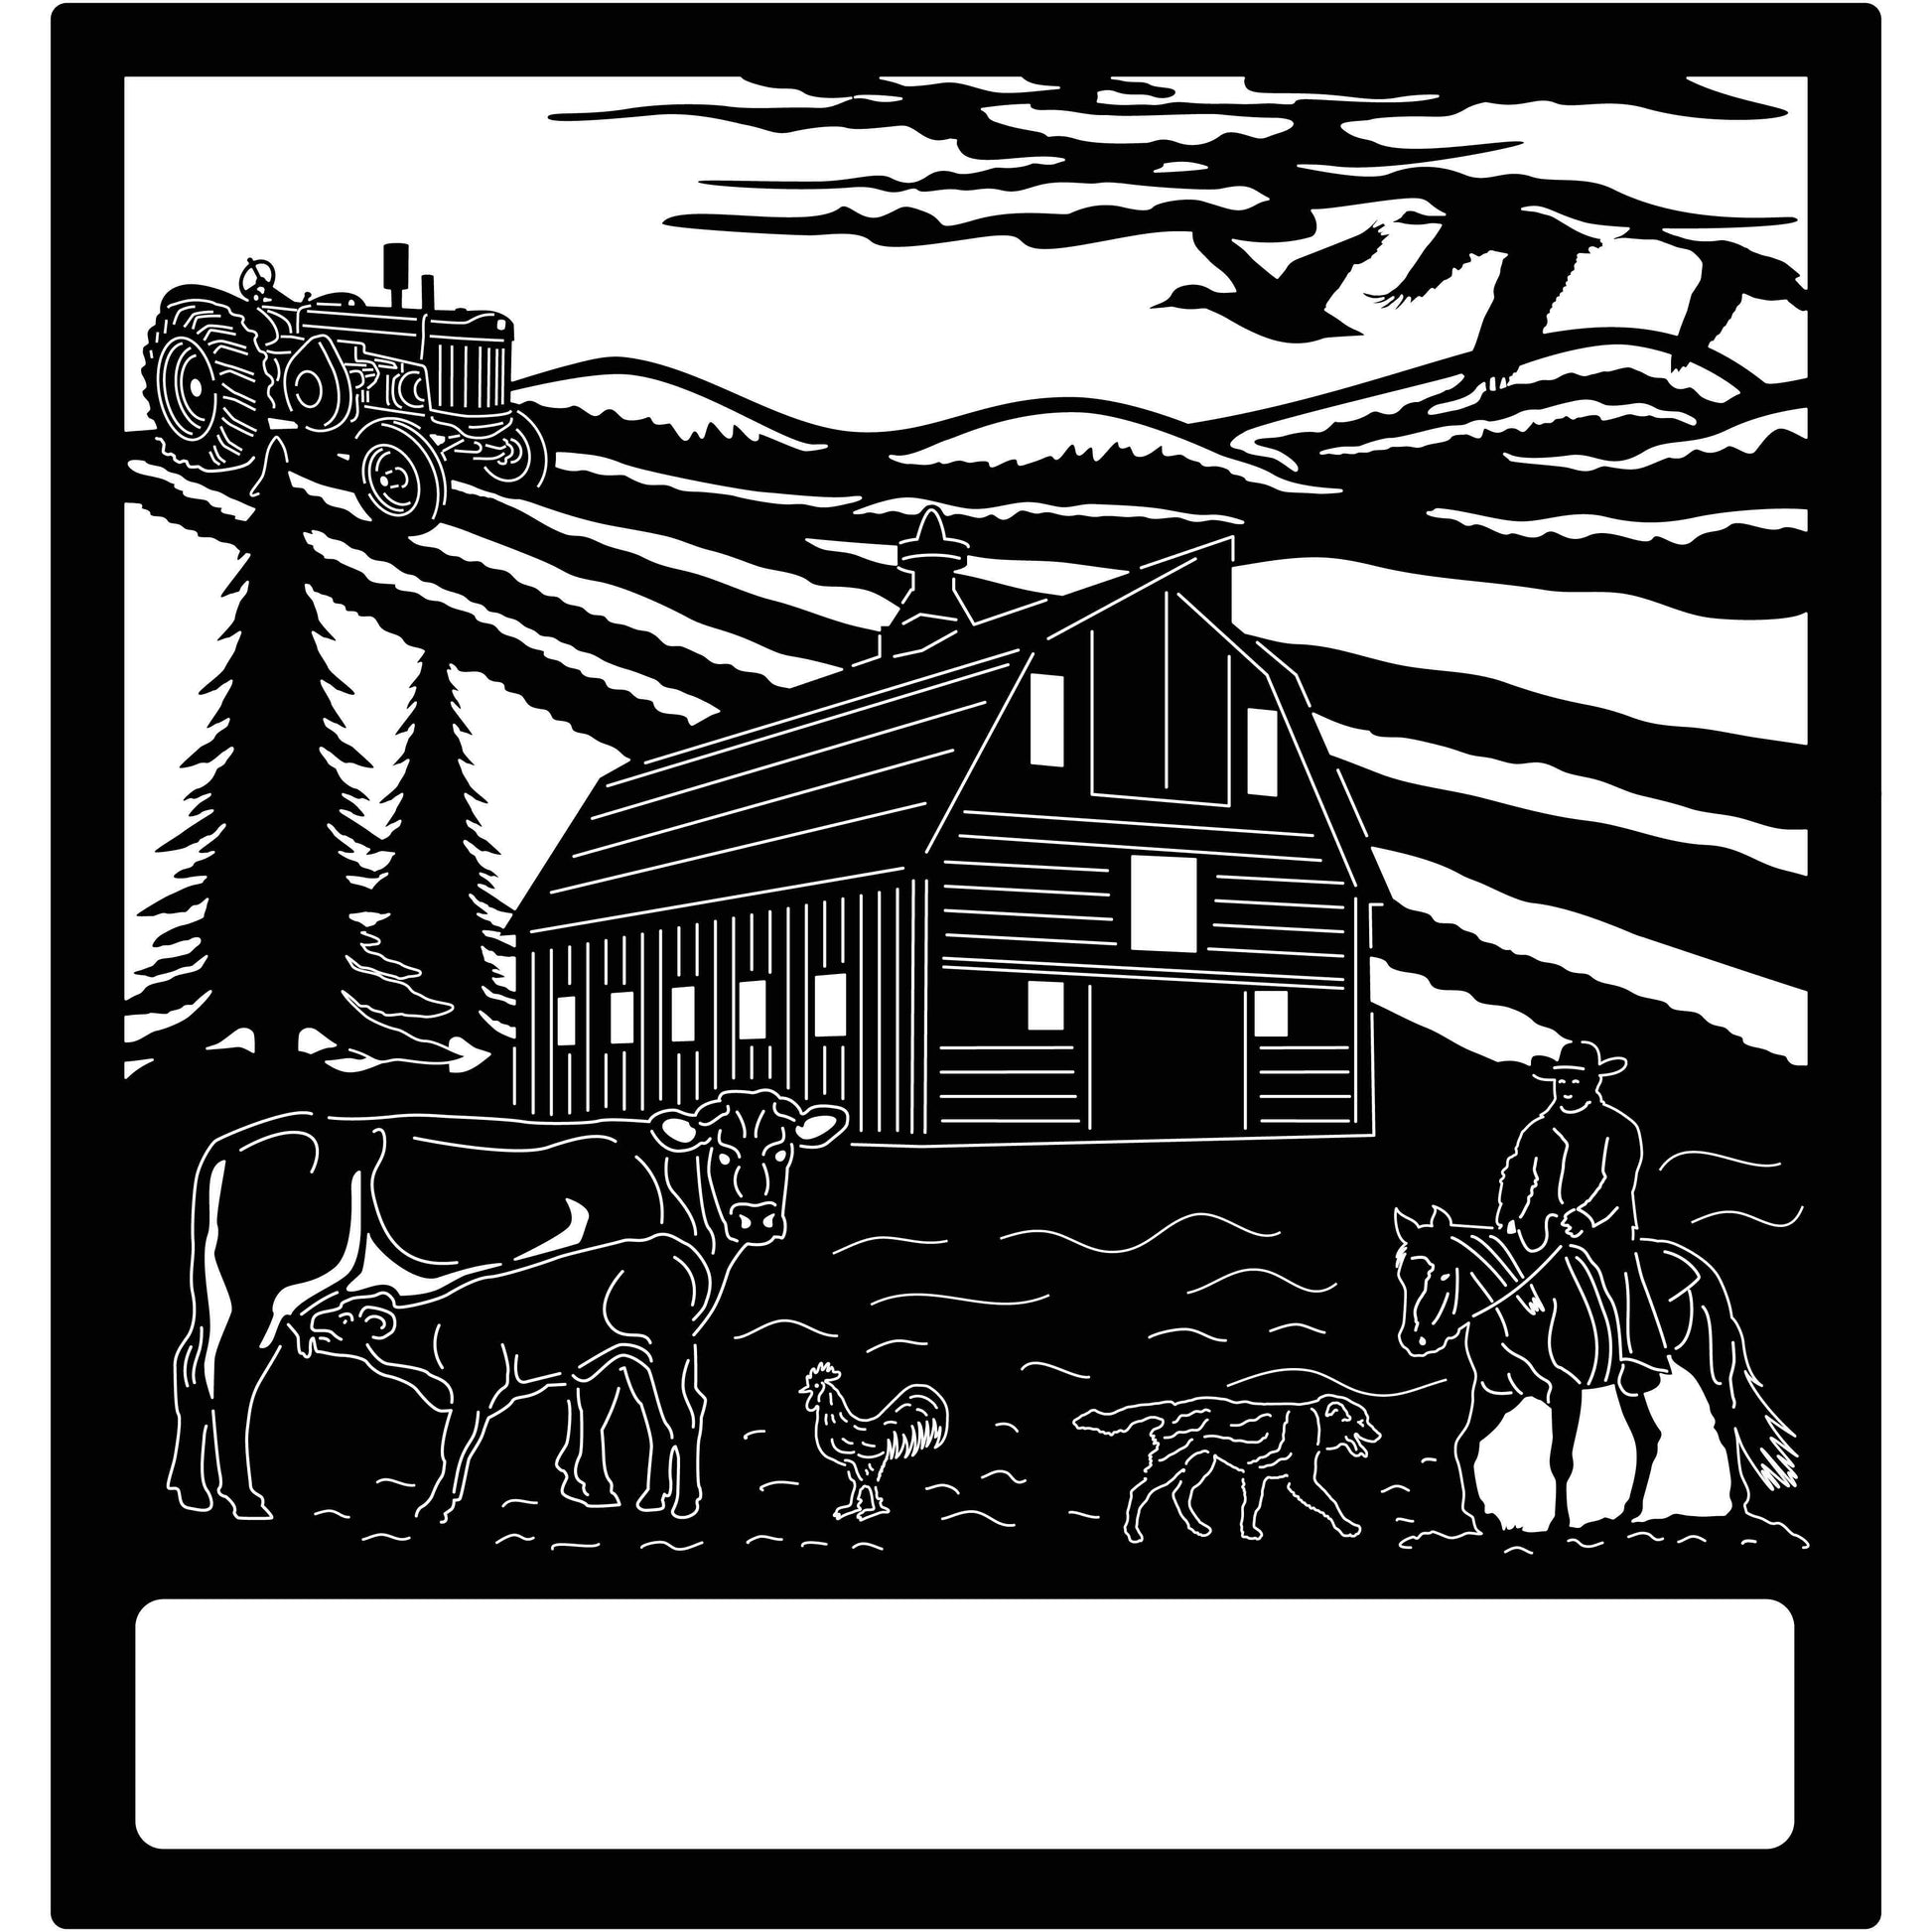 Barn, Field, Tractor, trees, Chicken, Dog, Cows and Cowboy scene, Custom